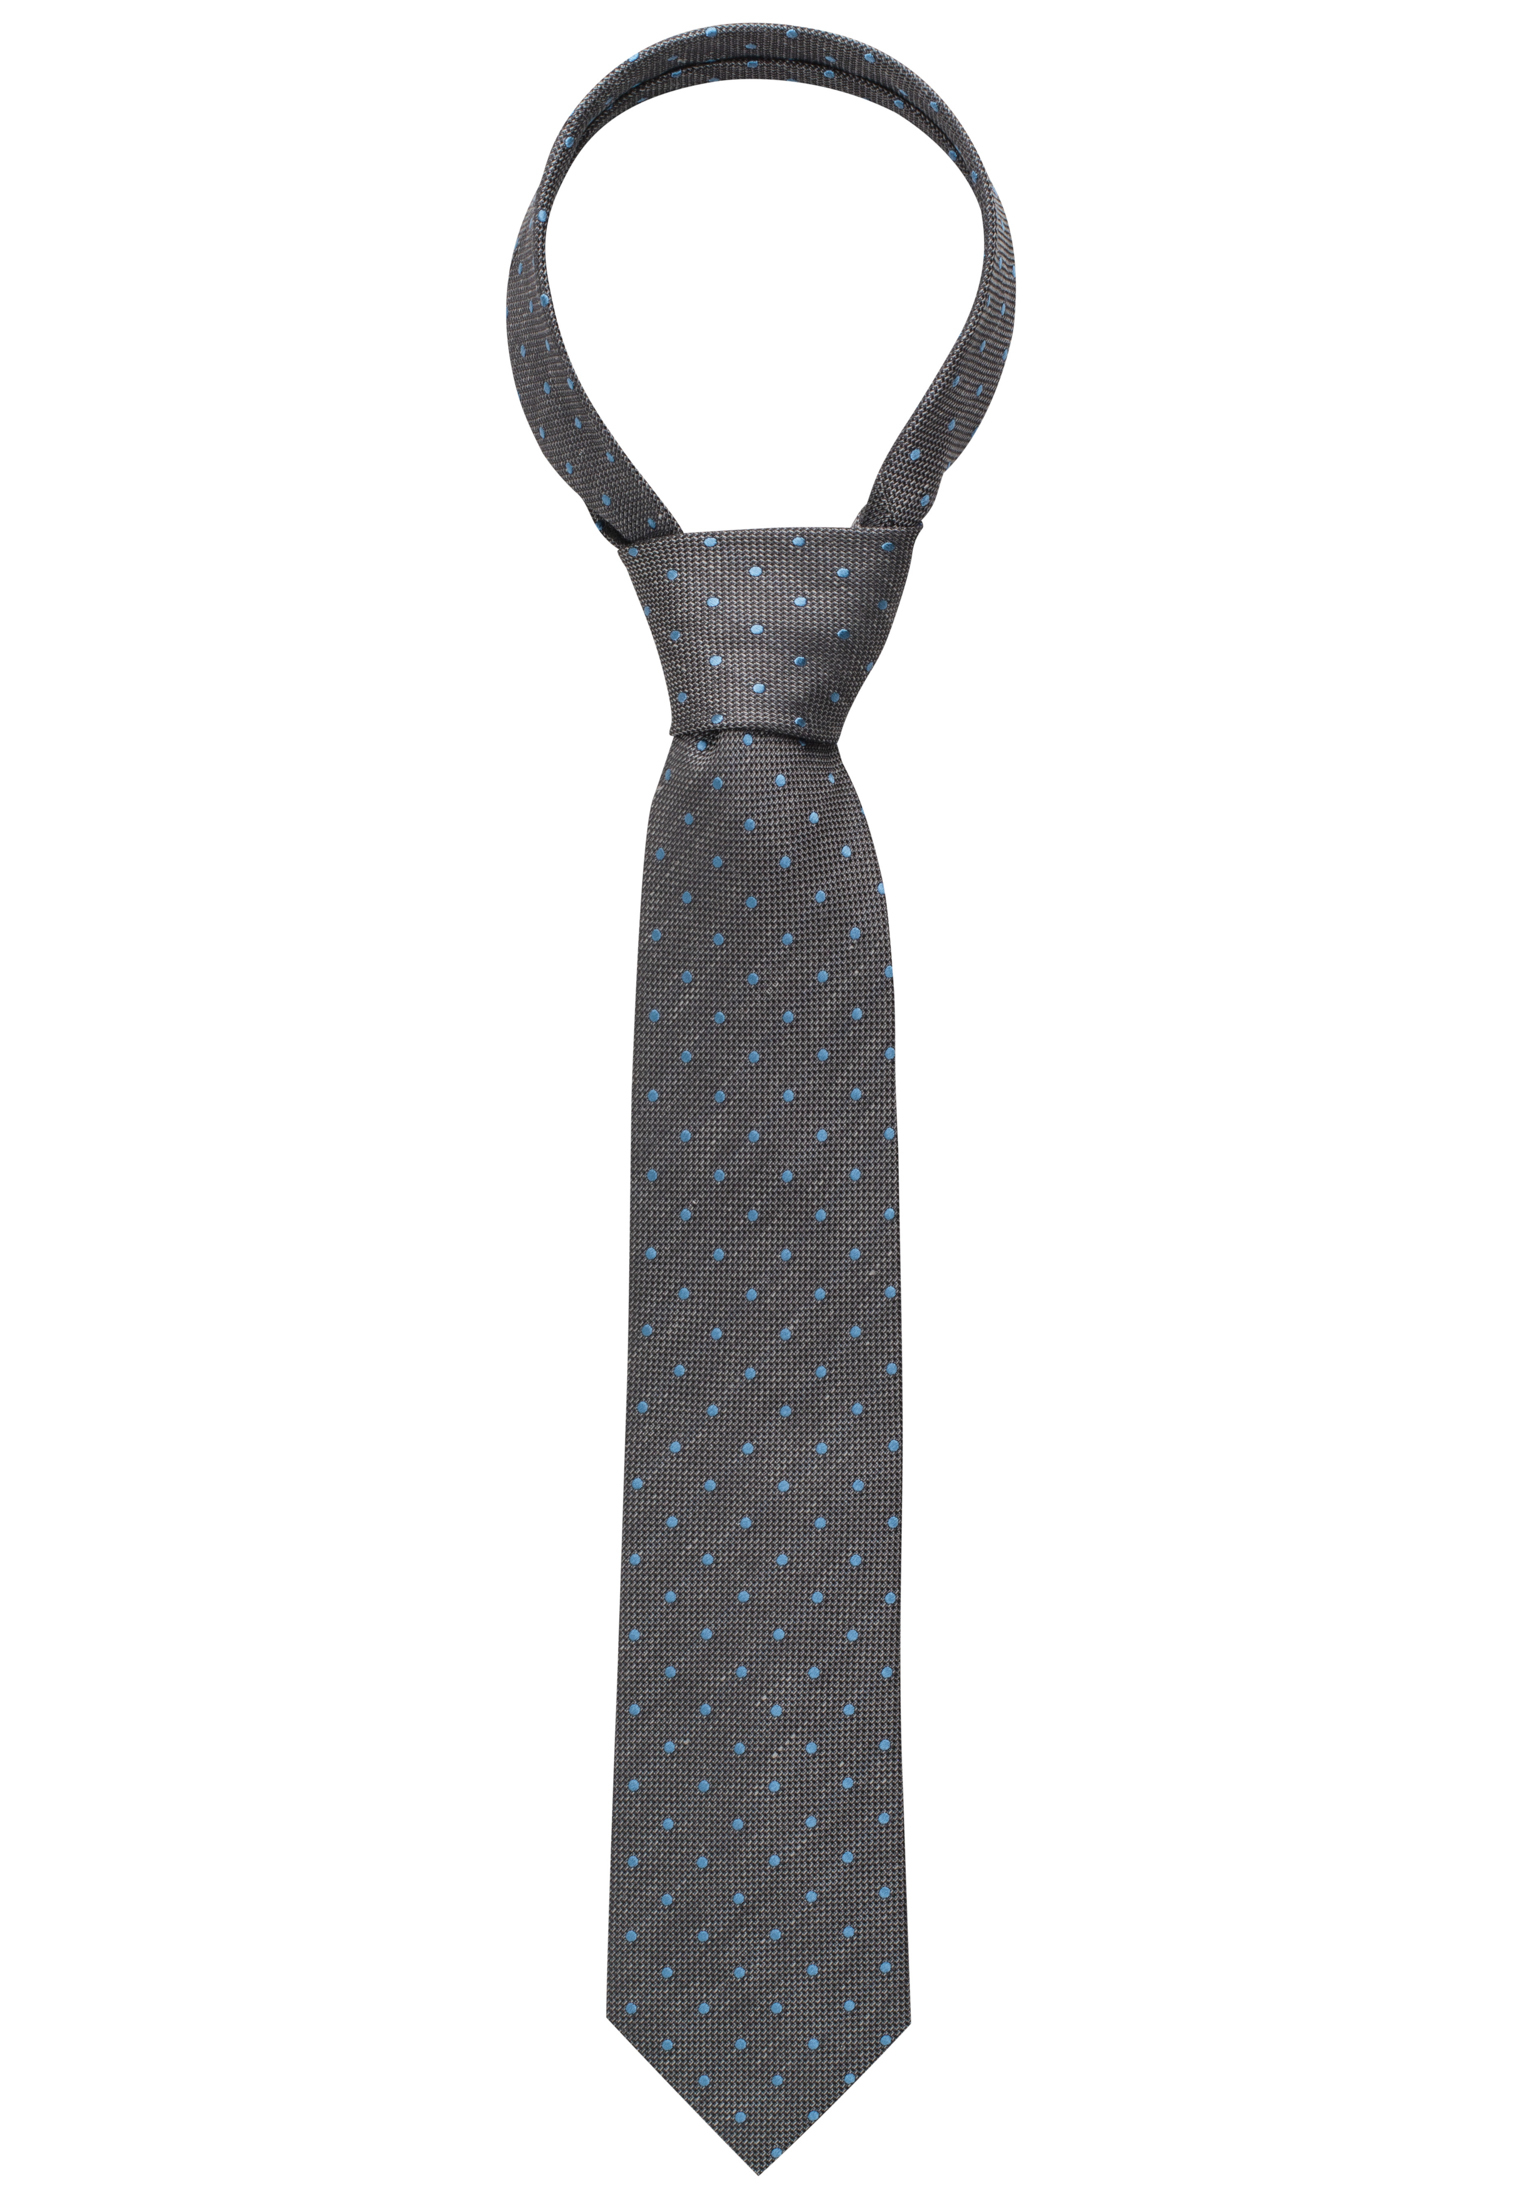 Krawatte in grau getupft | | 142 | grau 1AC00469-03-01-142